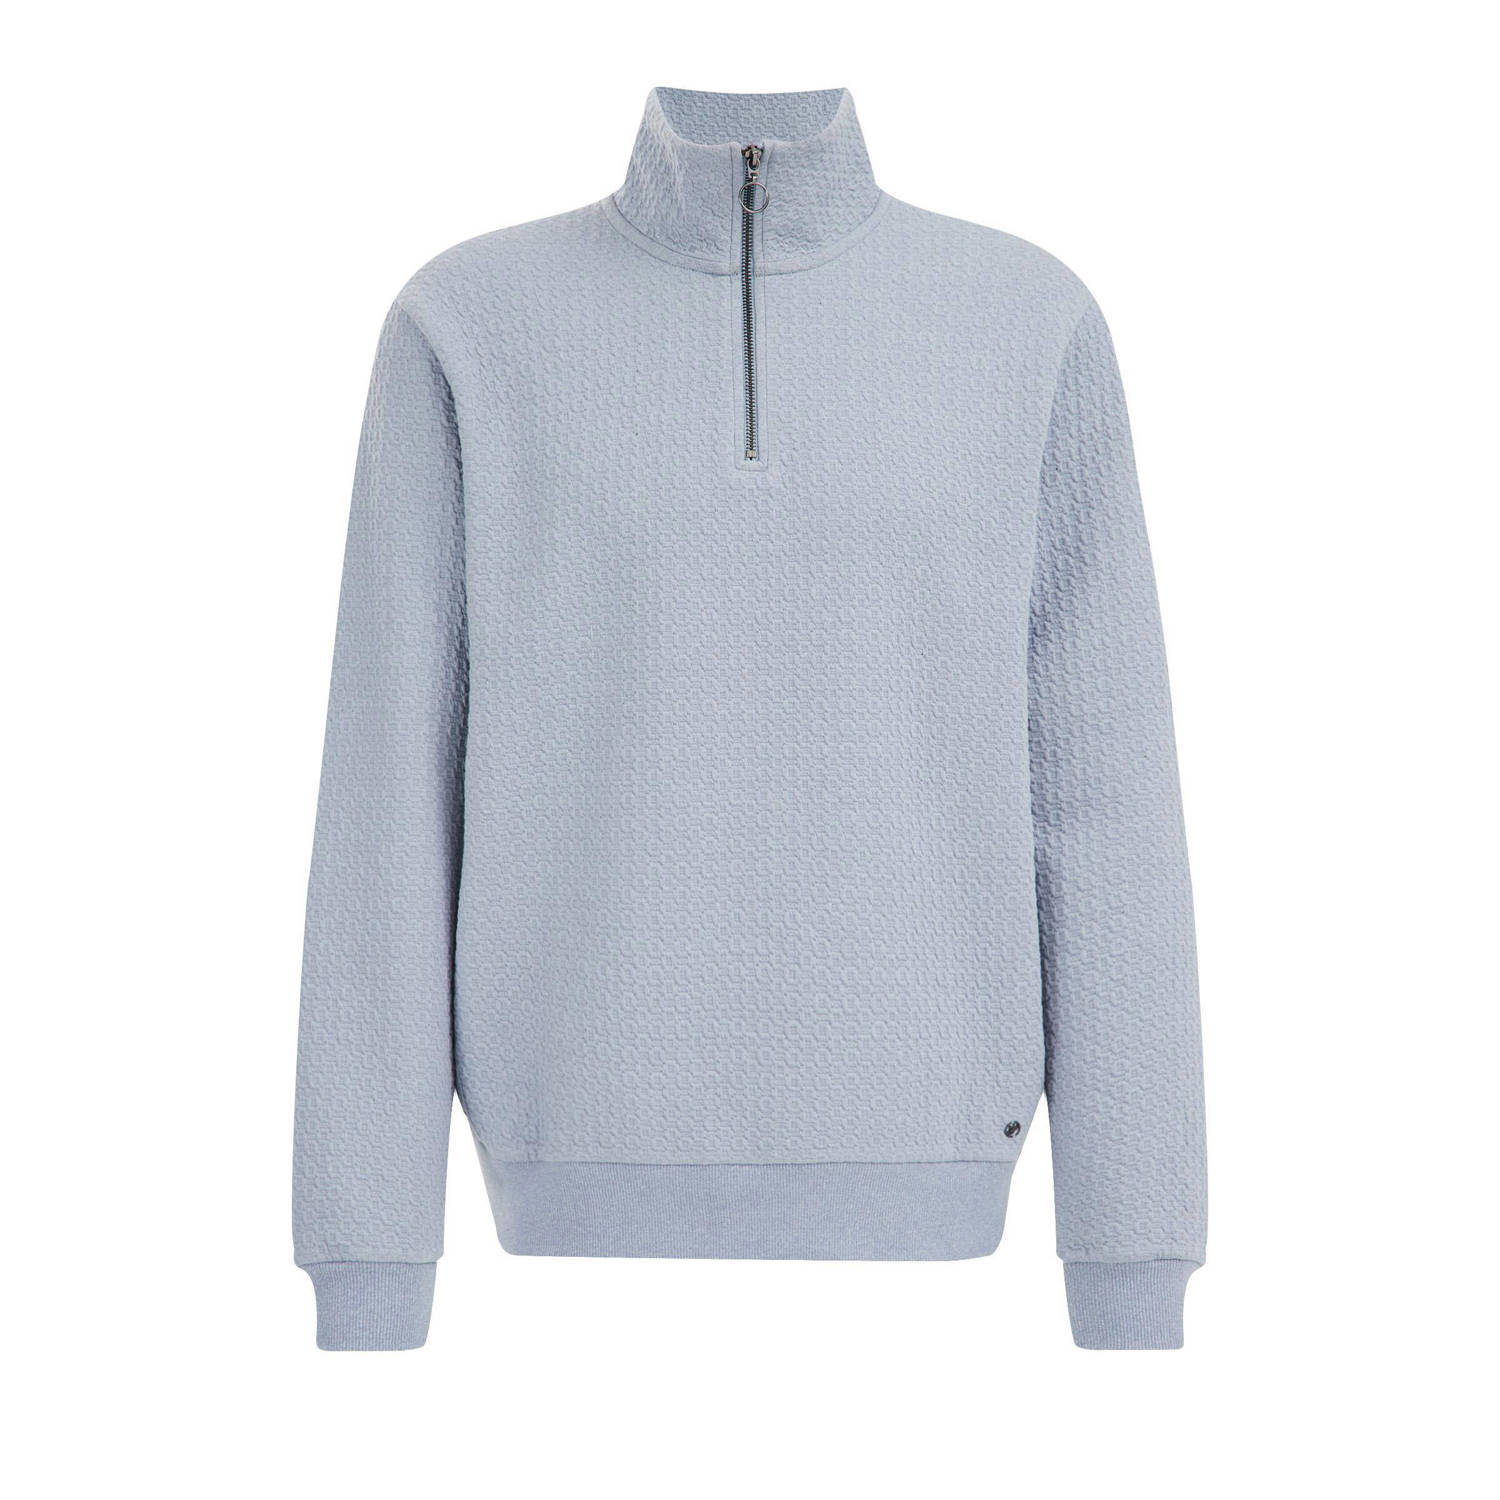 WE Fashion sweater CLARP met all over print en textuur rural blue